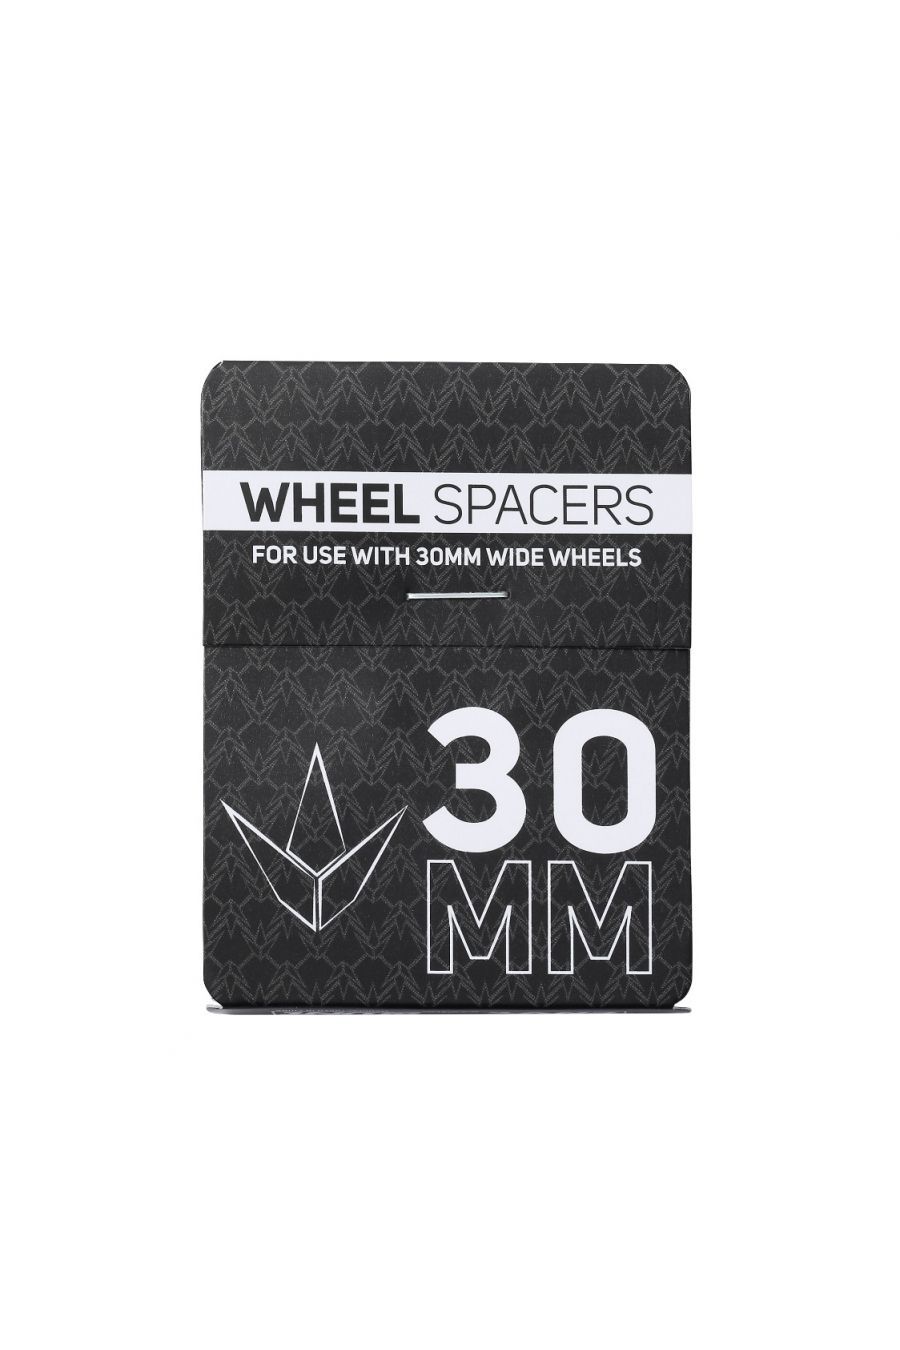 Kit Wheel Spacers pour Trottinette - 30 mm